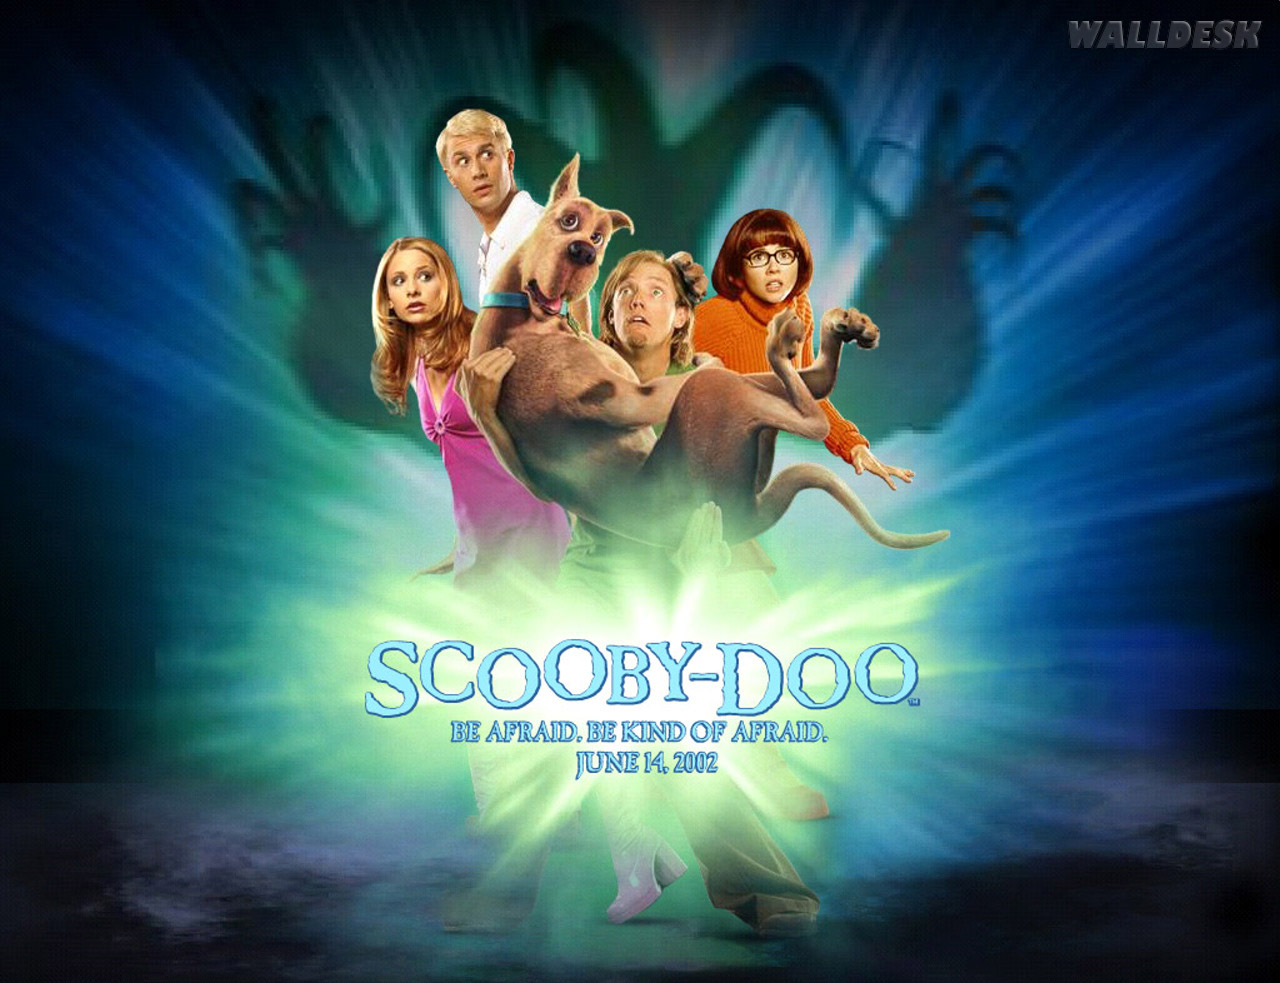 Scooby Doo O Filme Wallpaper - Live Action Scooby Doo Meme - HD Wallpaper 